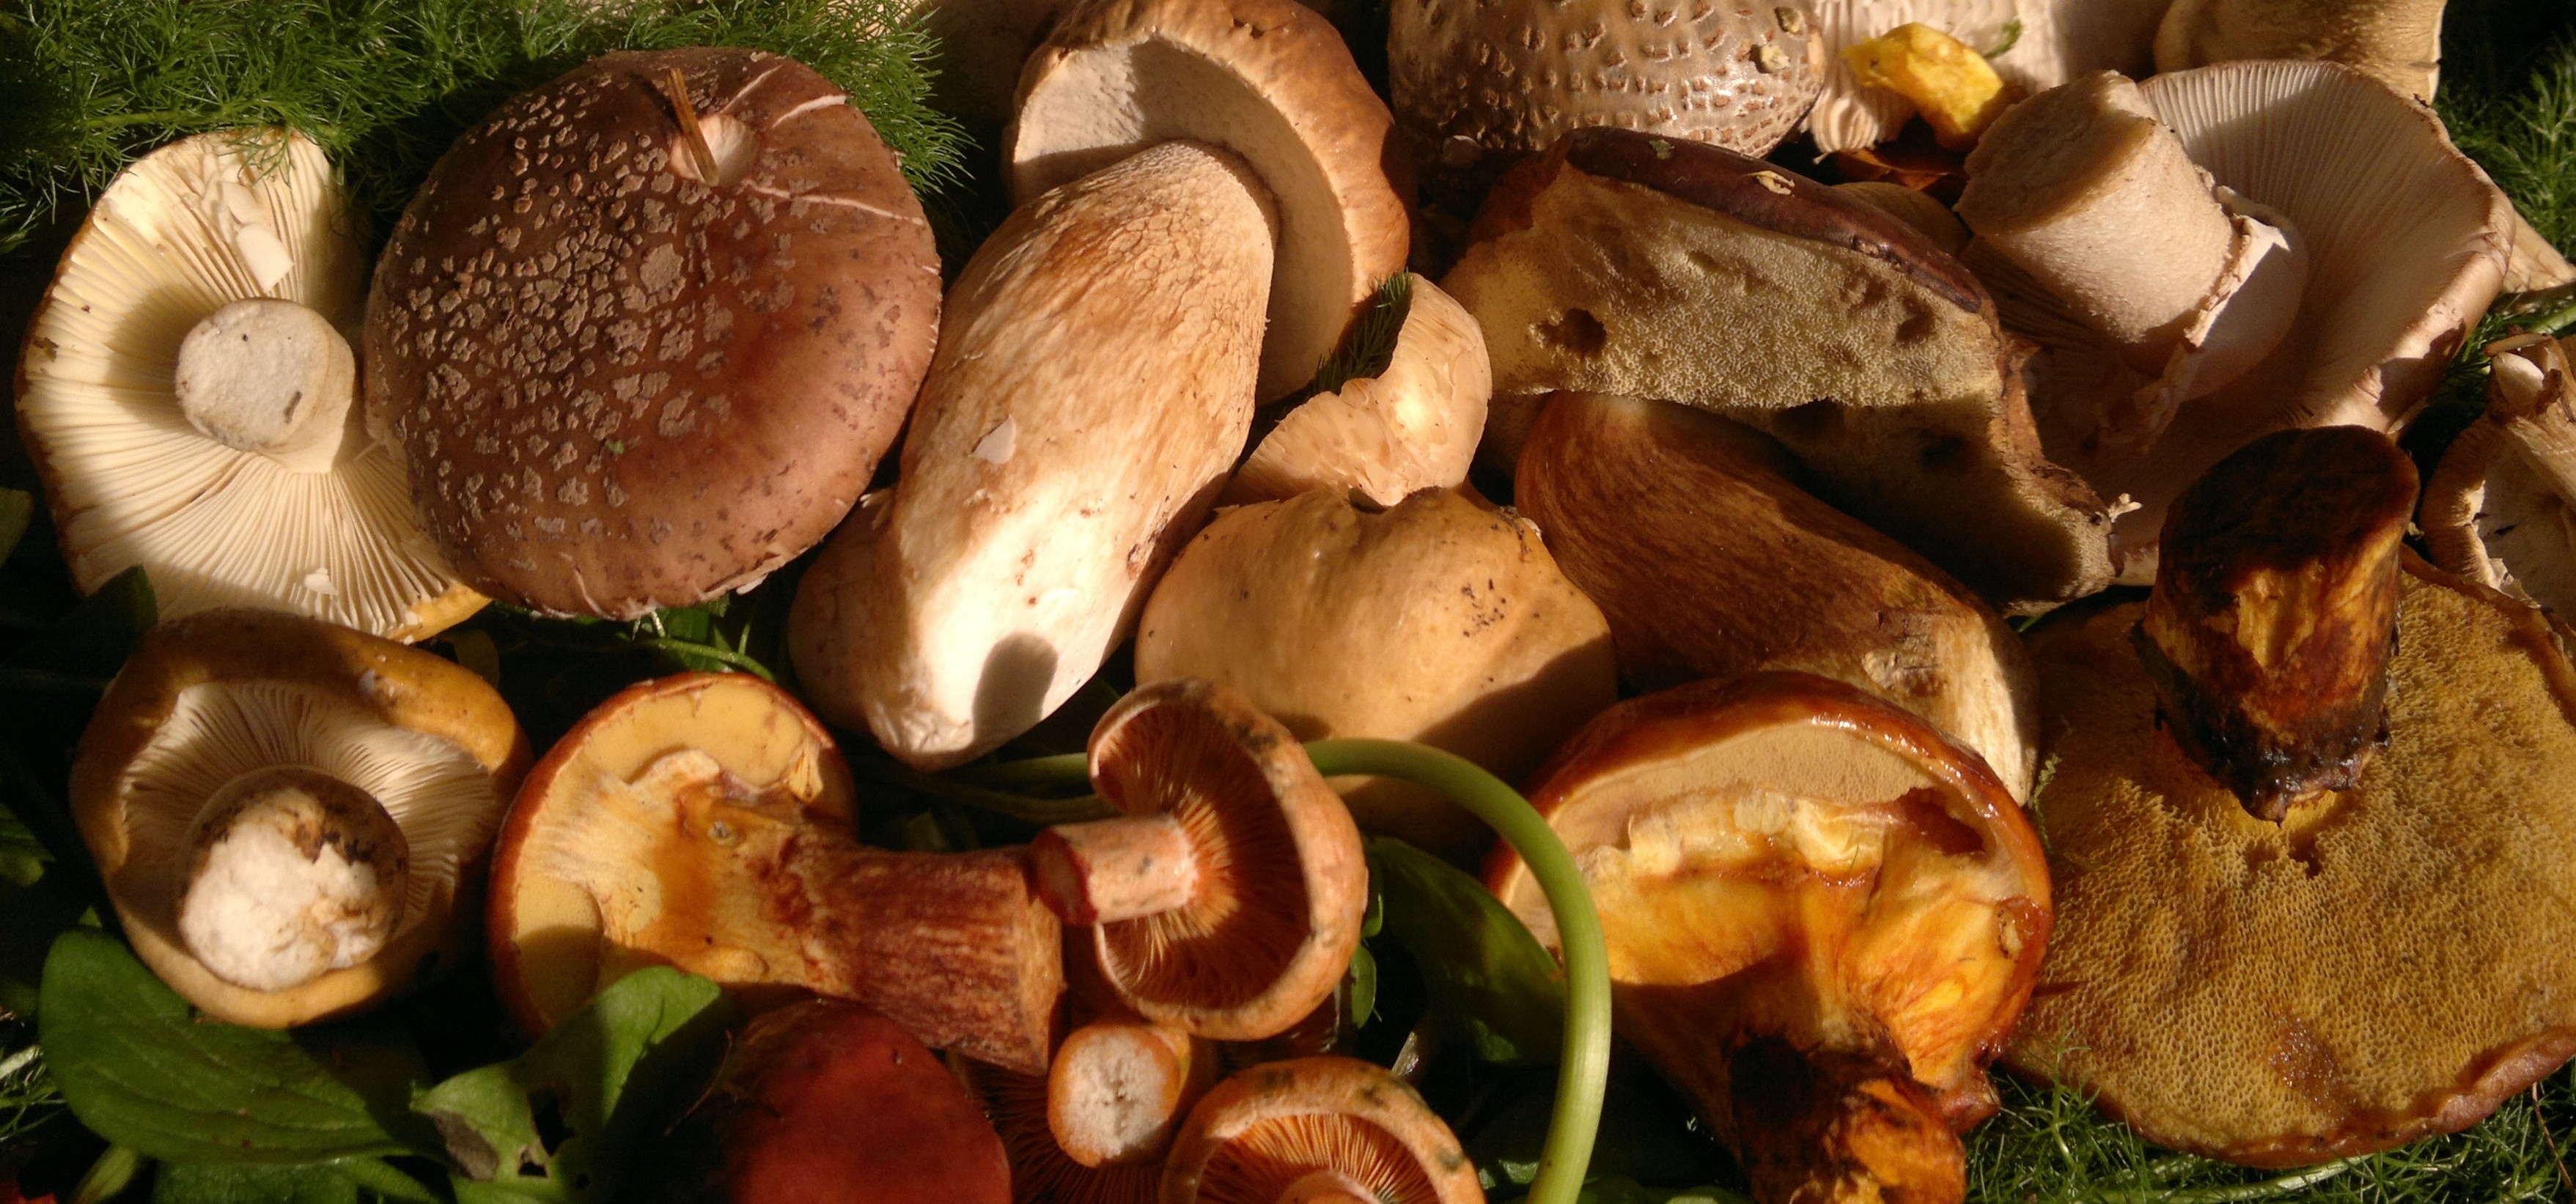 Edible August fungi